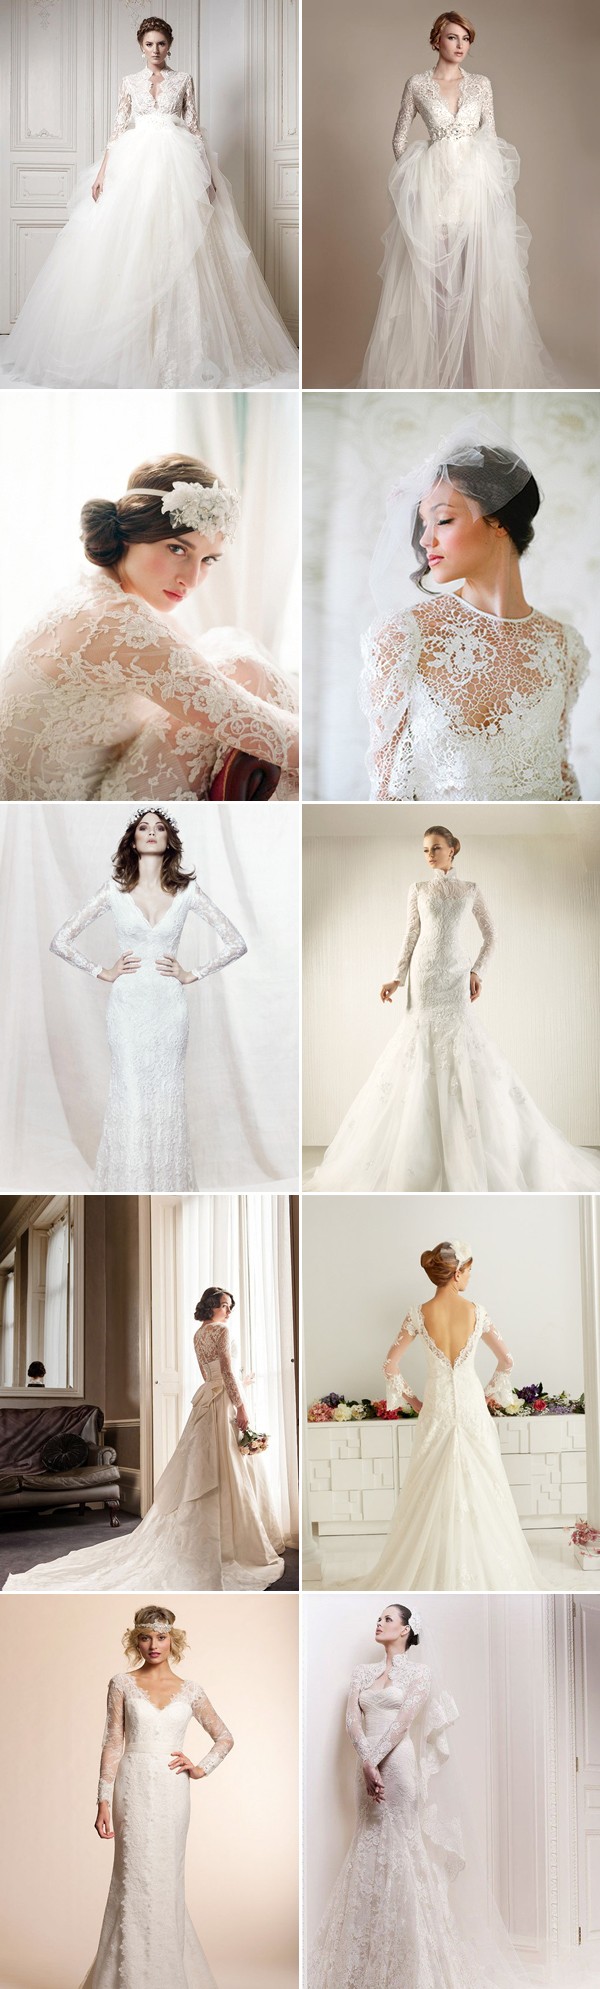 02_long-sleeve-wedding-dresses